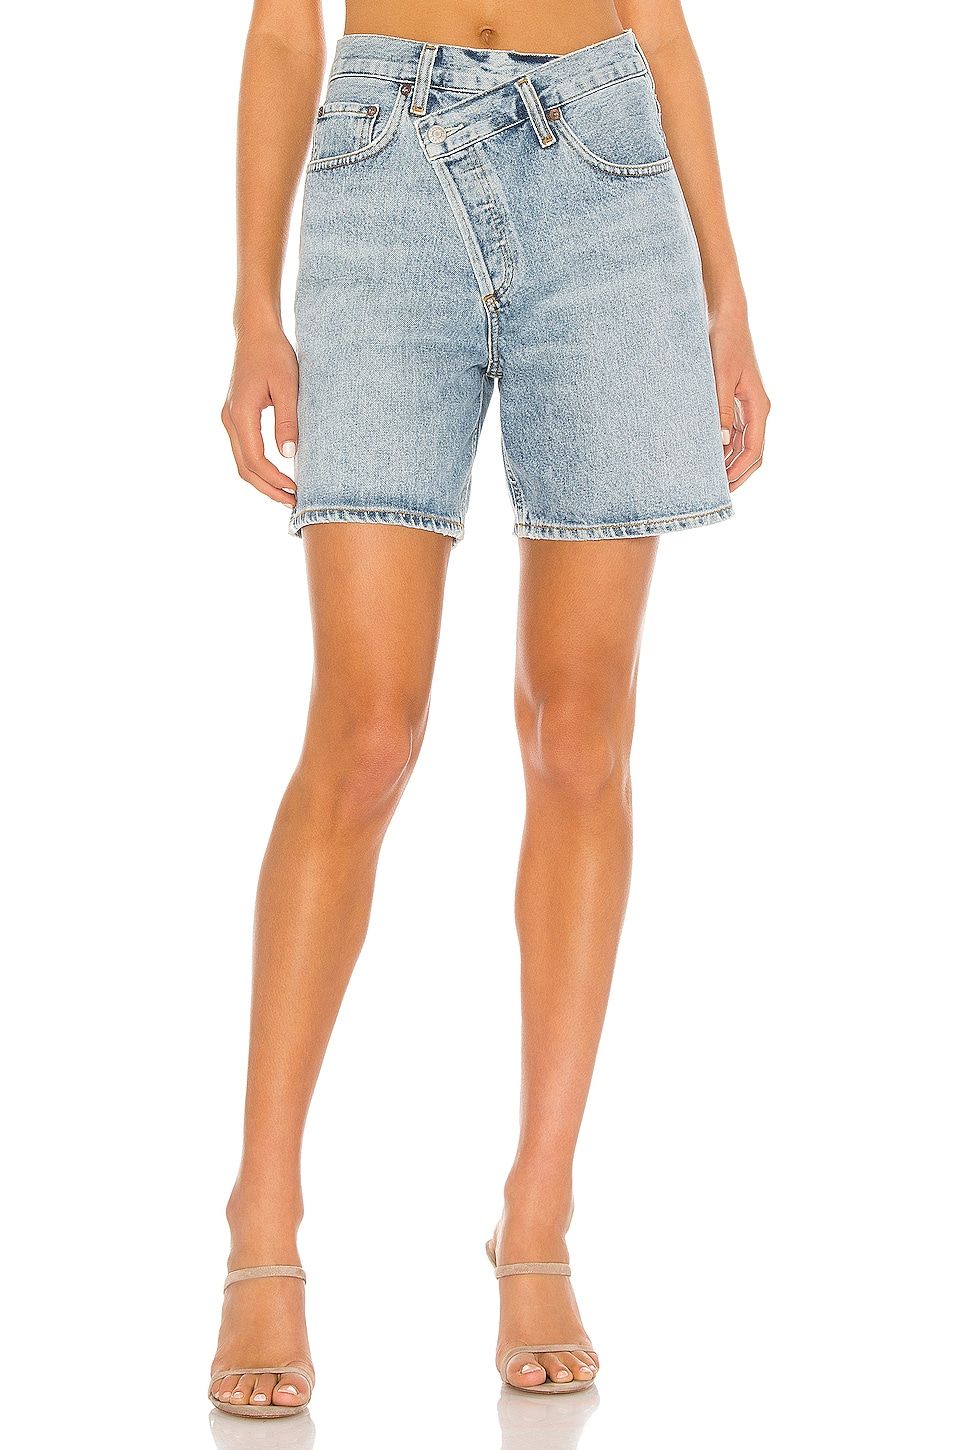 CHICZONE Women's Denim Shorts Mid Rise Ripped Jean Shorts Stretchy Folded Hem Hot Short Jeans 